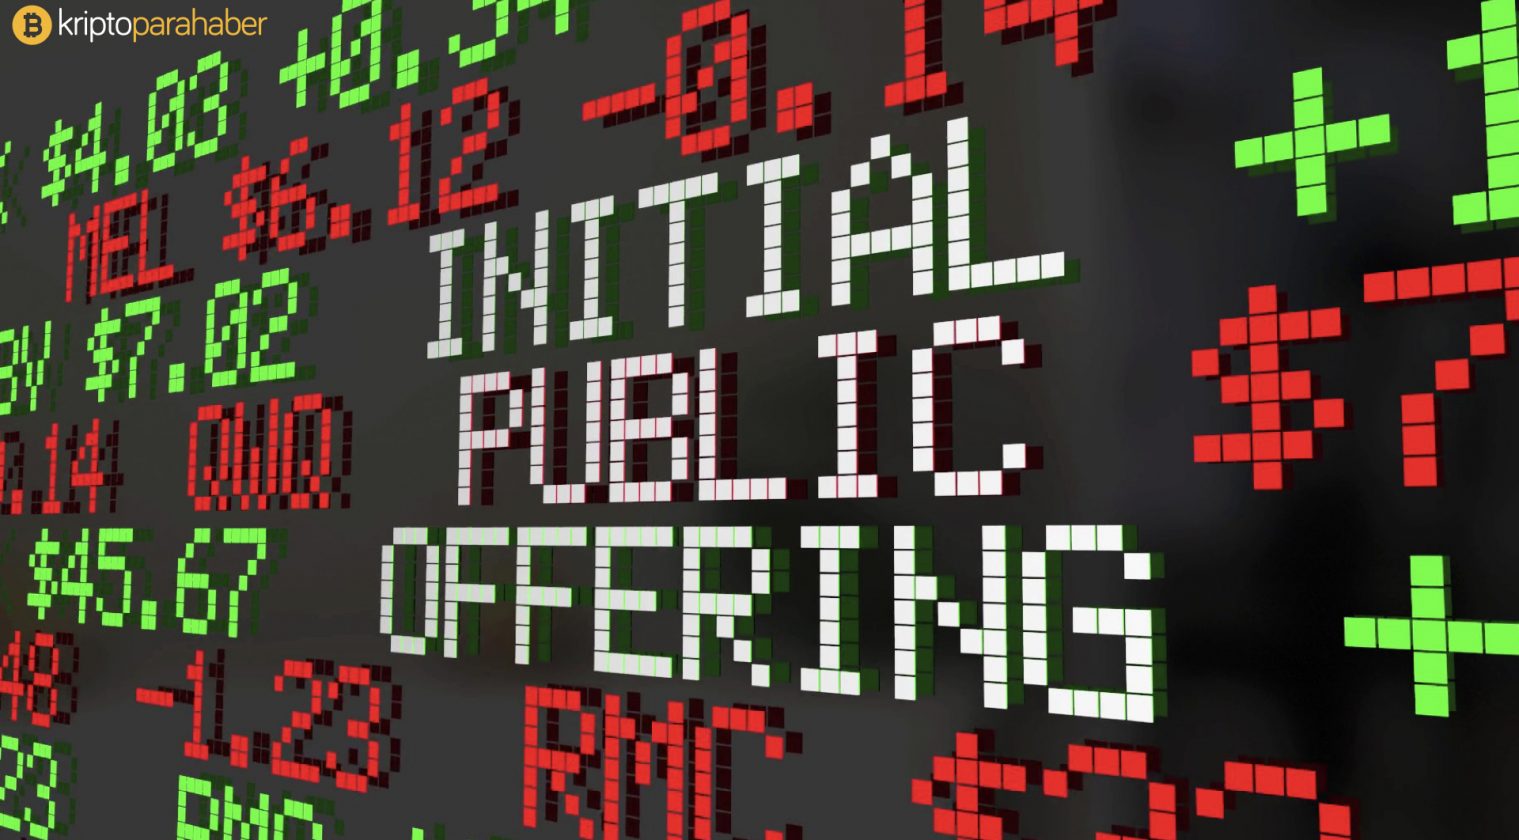 IPO: Initial Public Offering